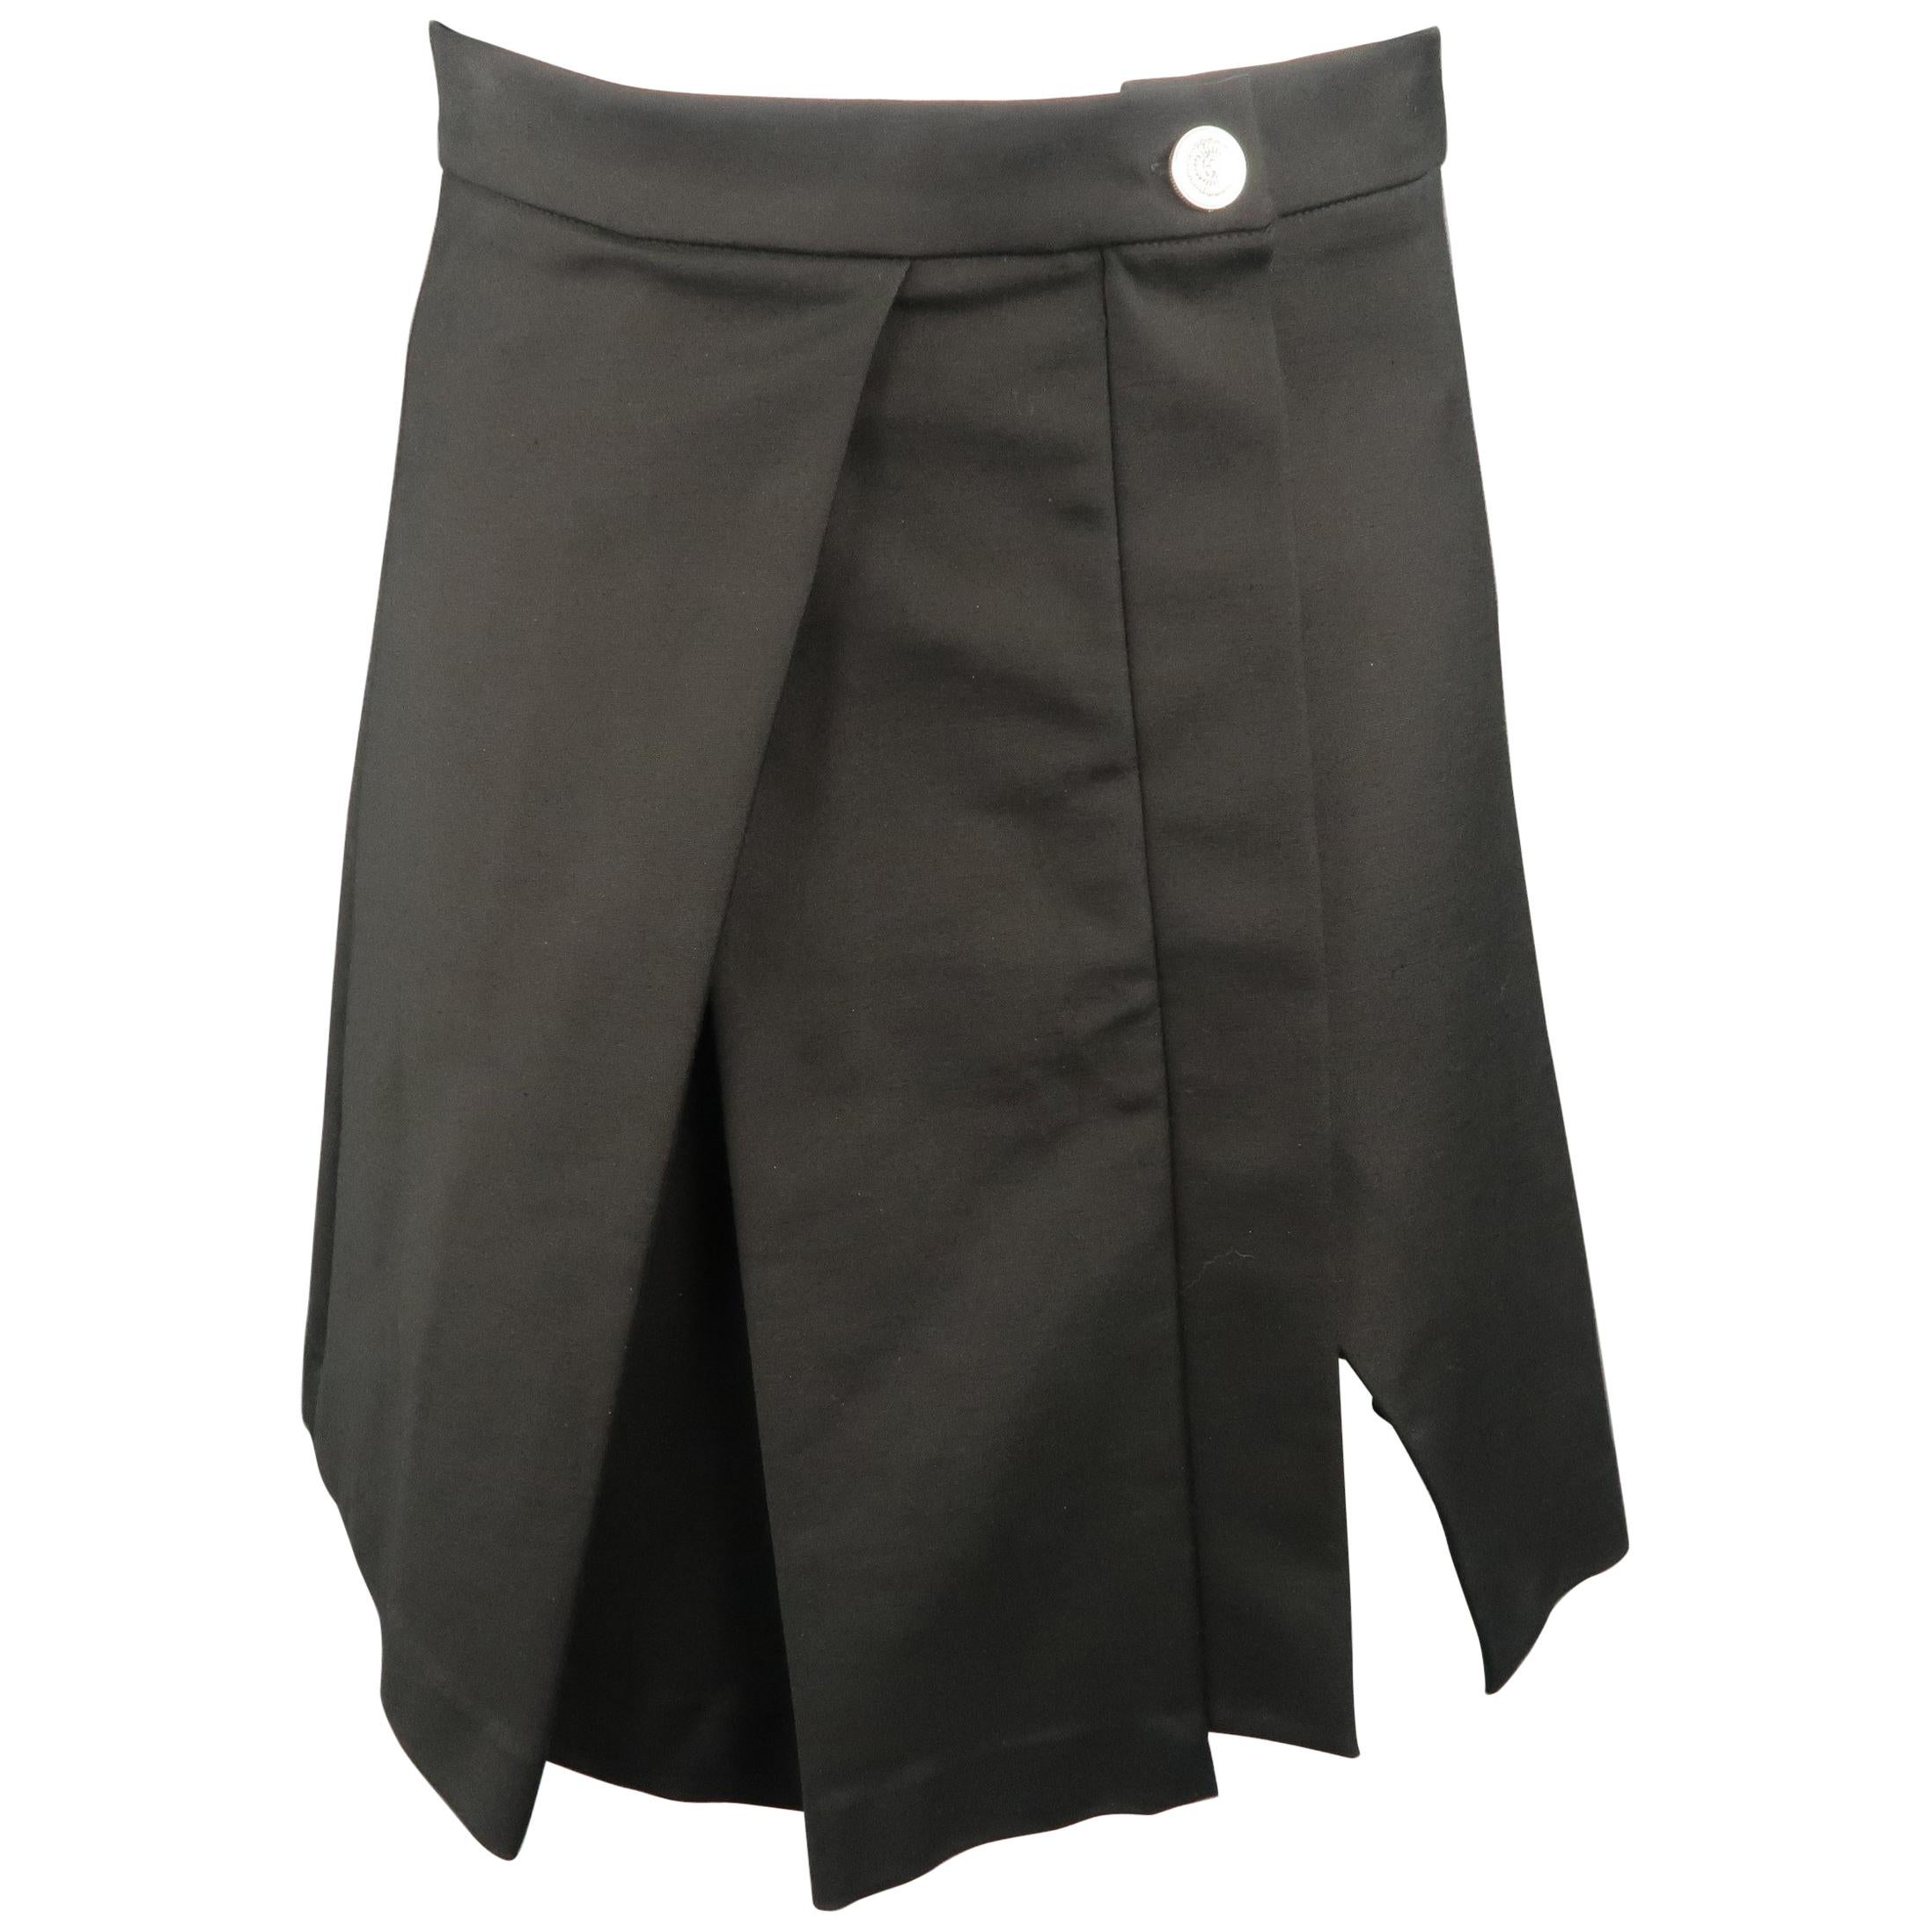 VERSUS by GIANNI VERSACE Size 6 Black Cotton Asymmetrical Skirt